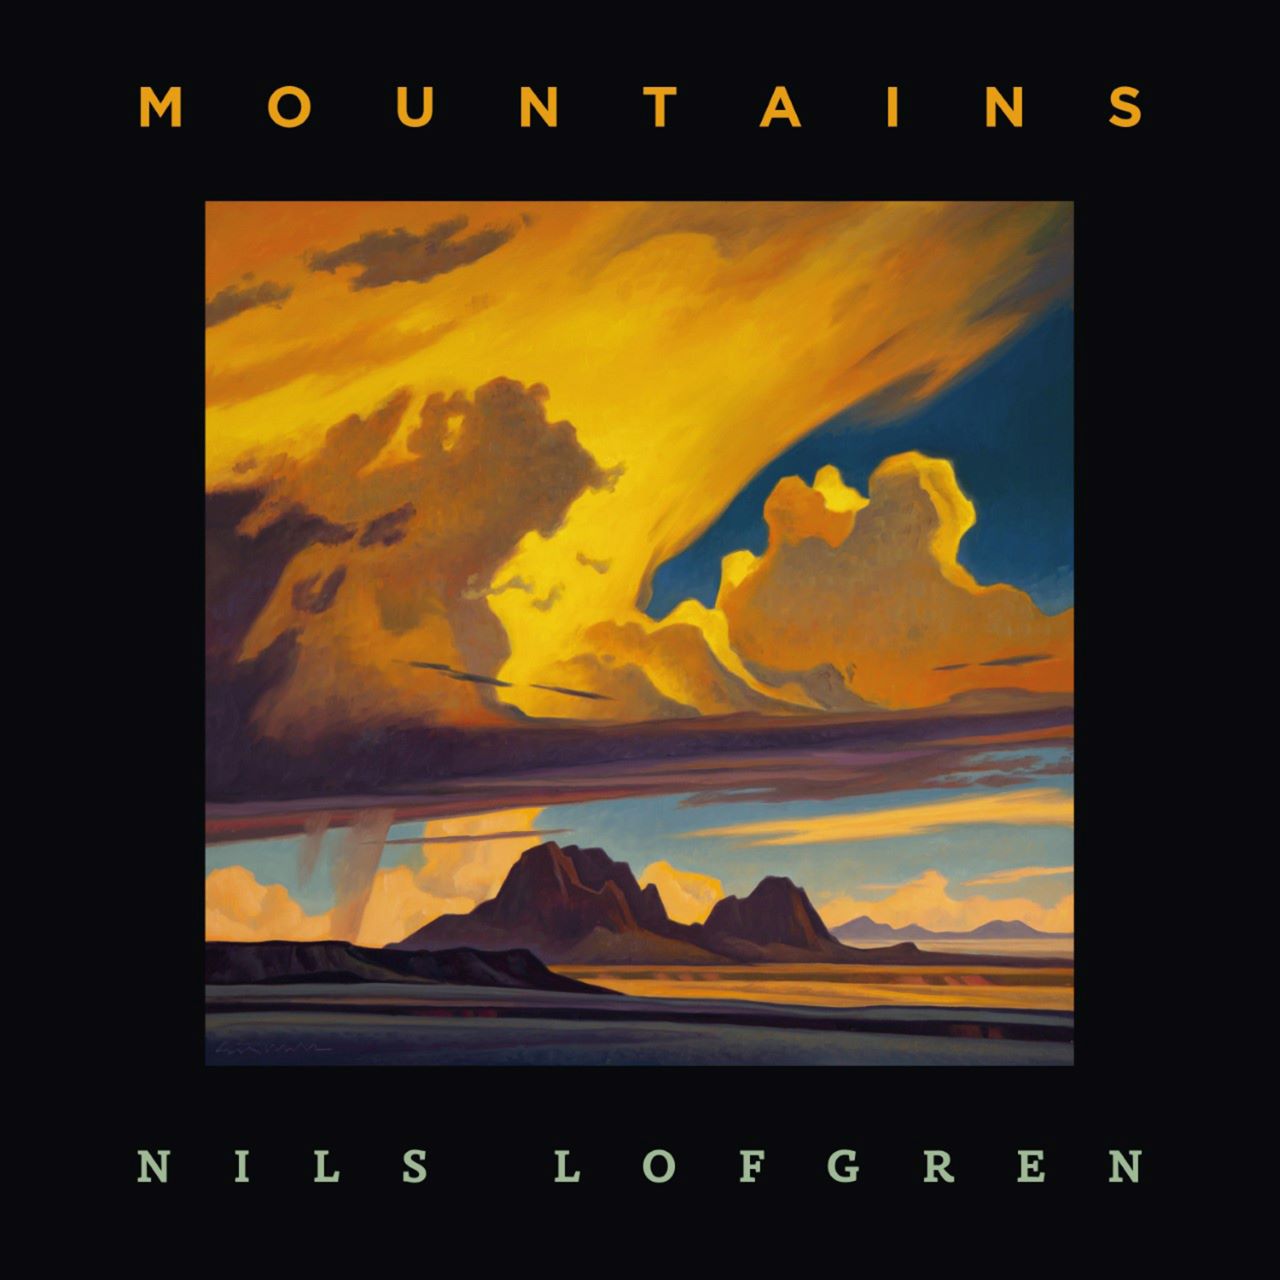 Nils Lofgren - Mountains cover album